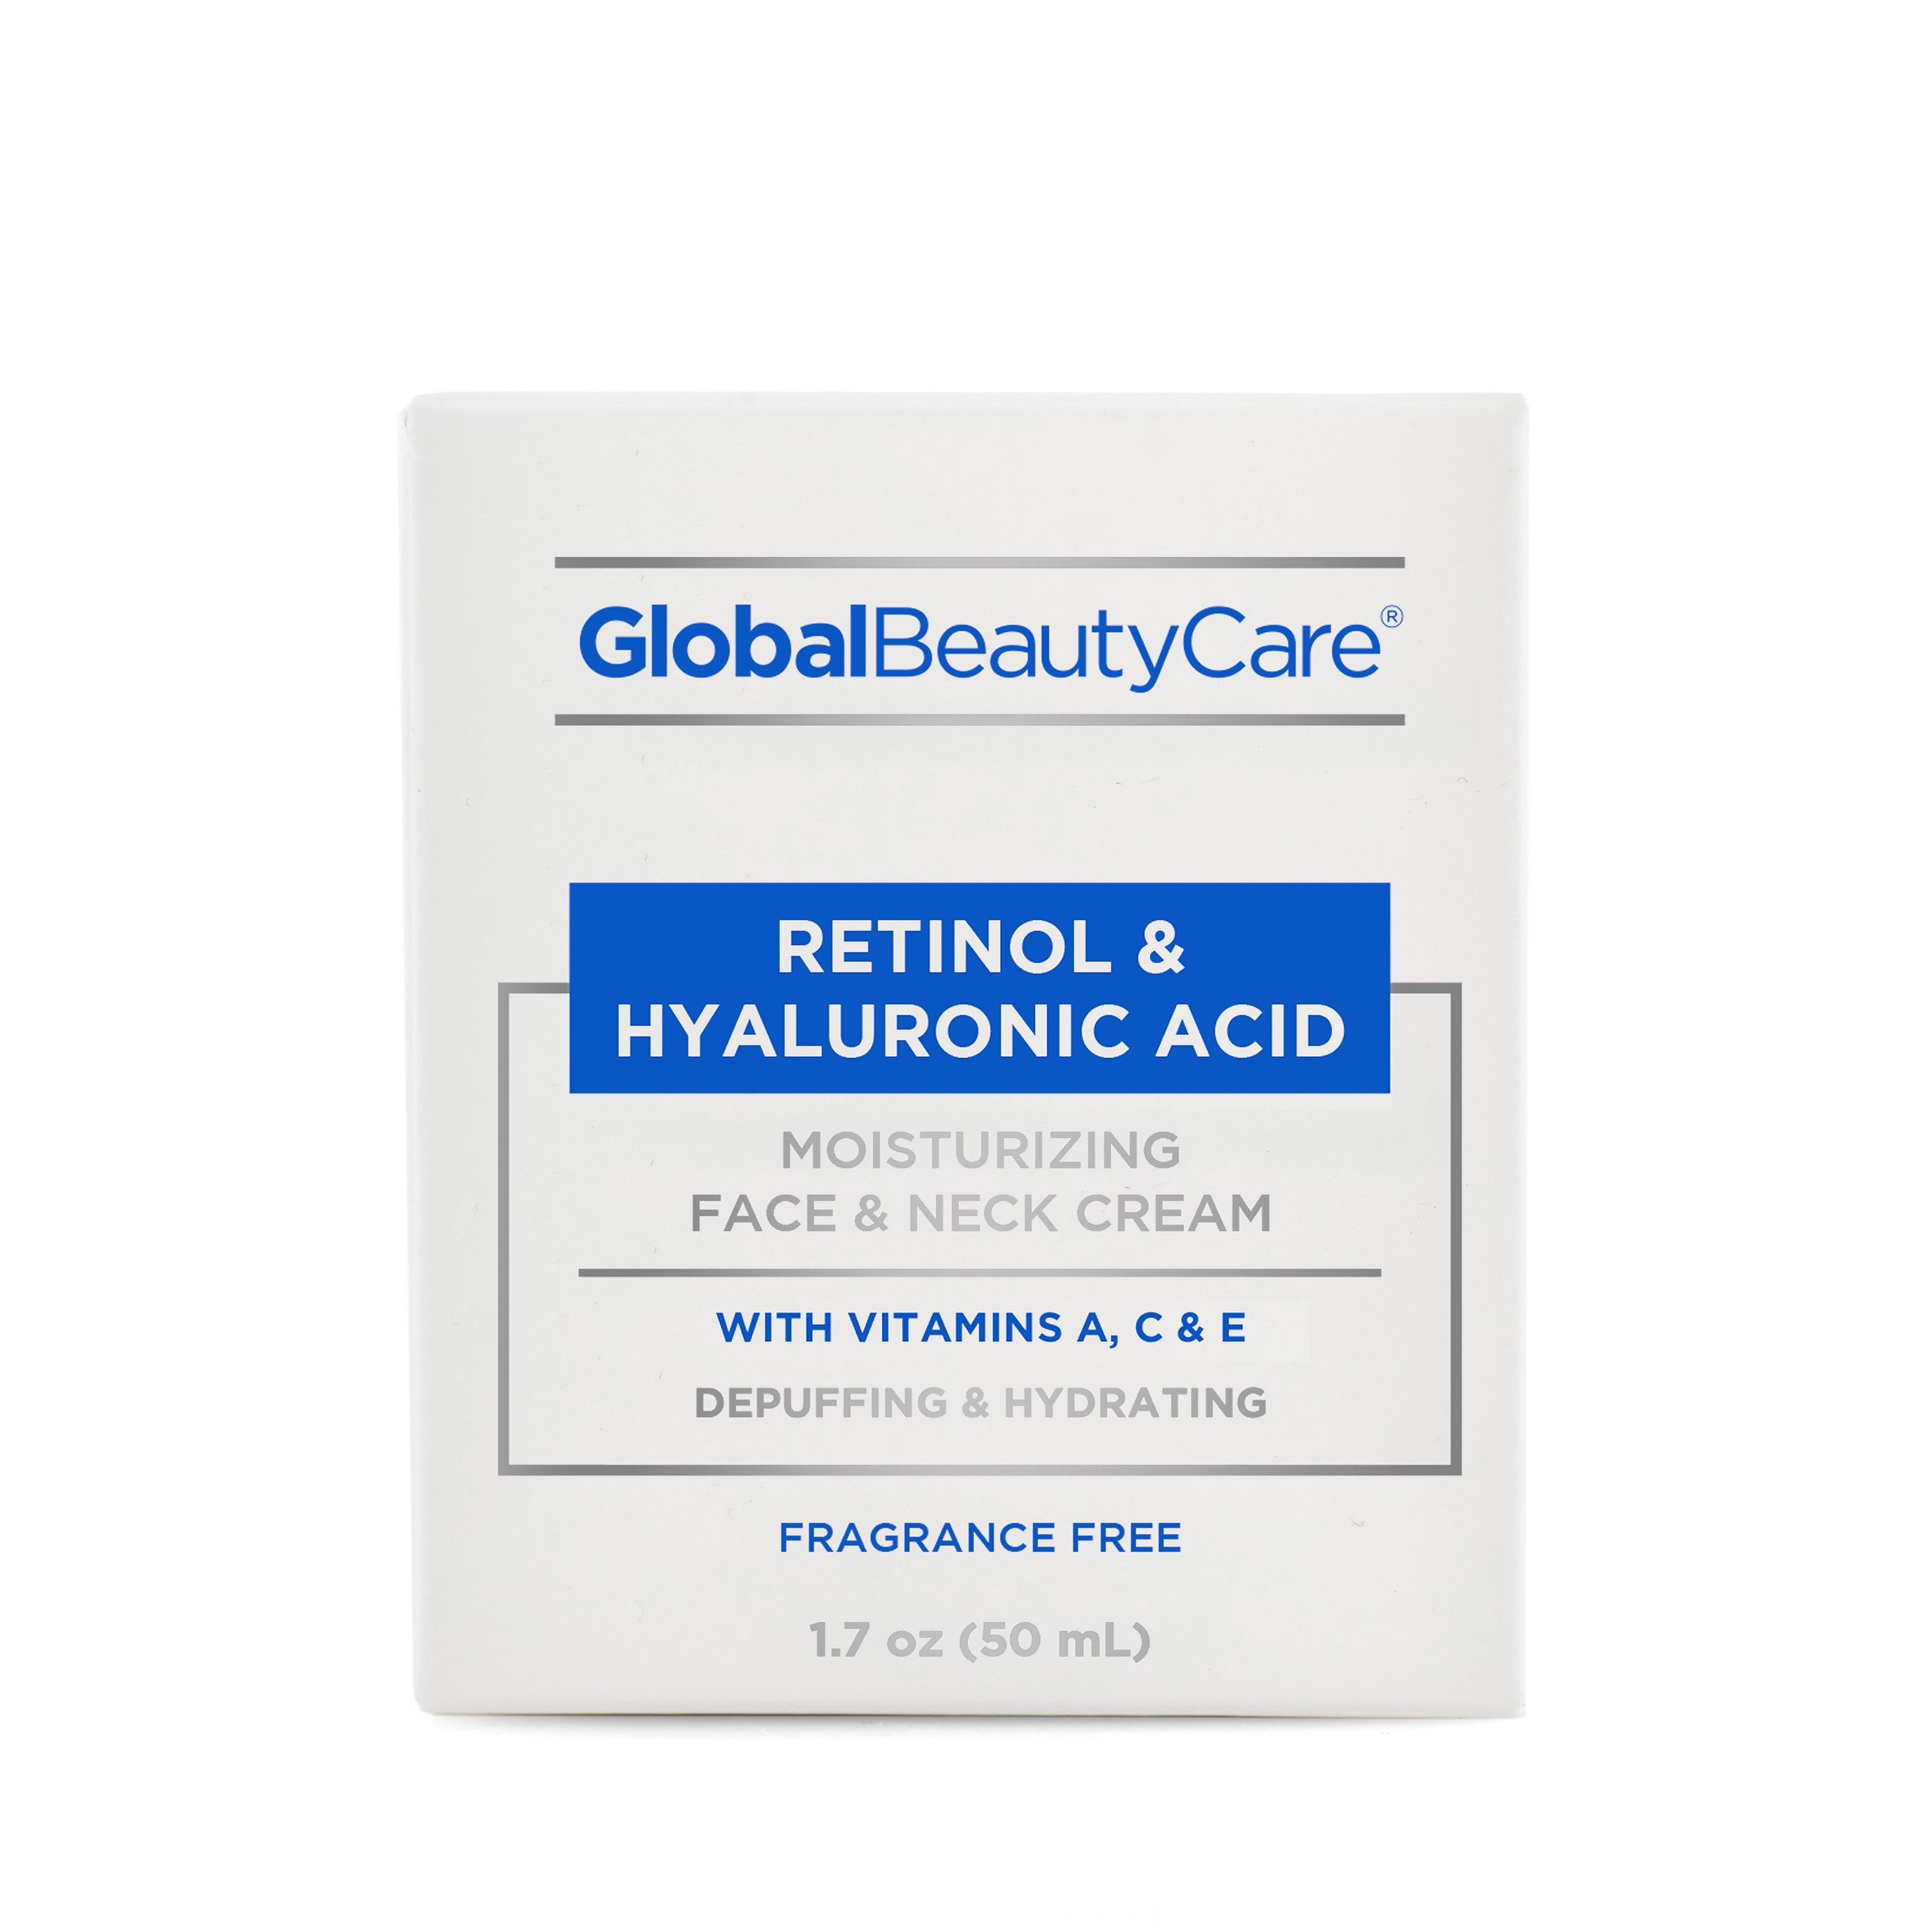 Retinol & Hyaluronic Acid Moisturizing Face & Neck Cream